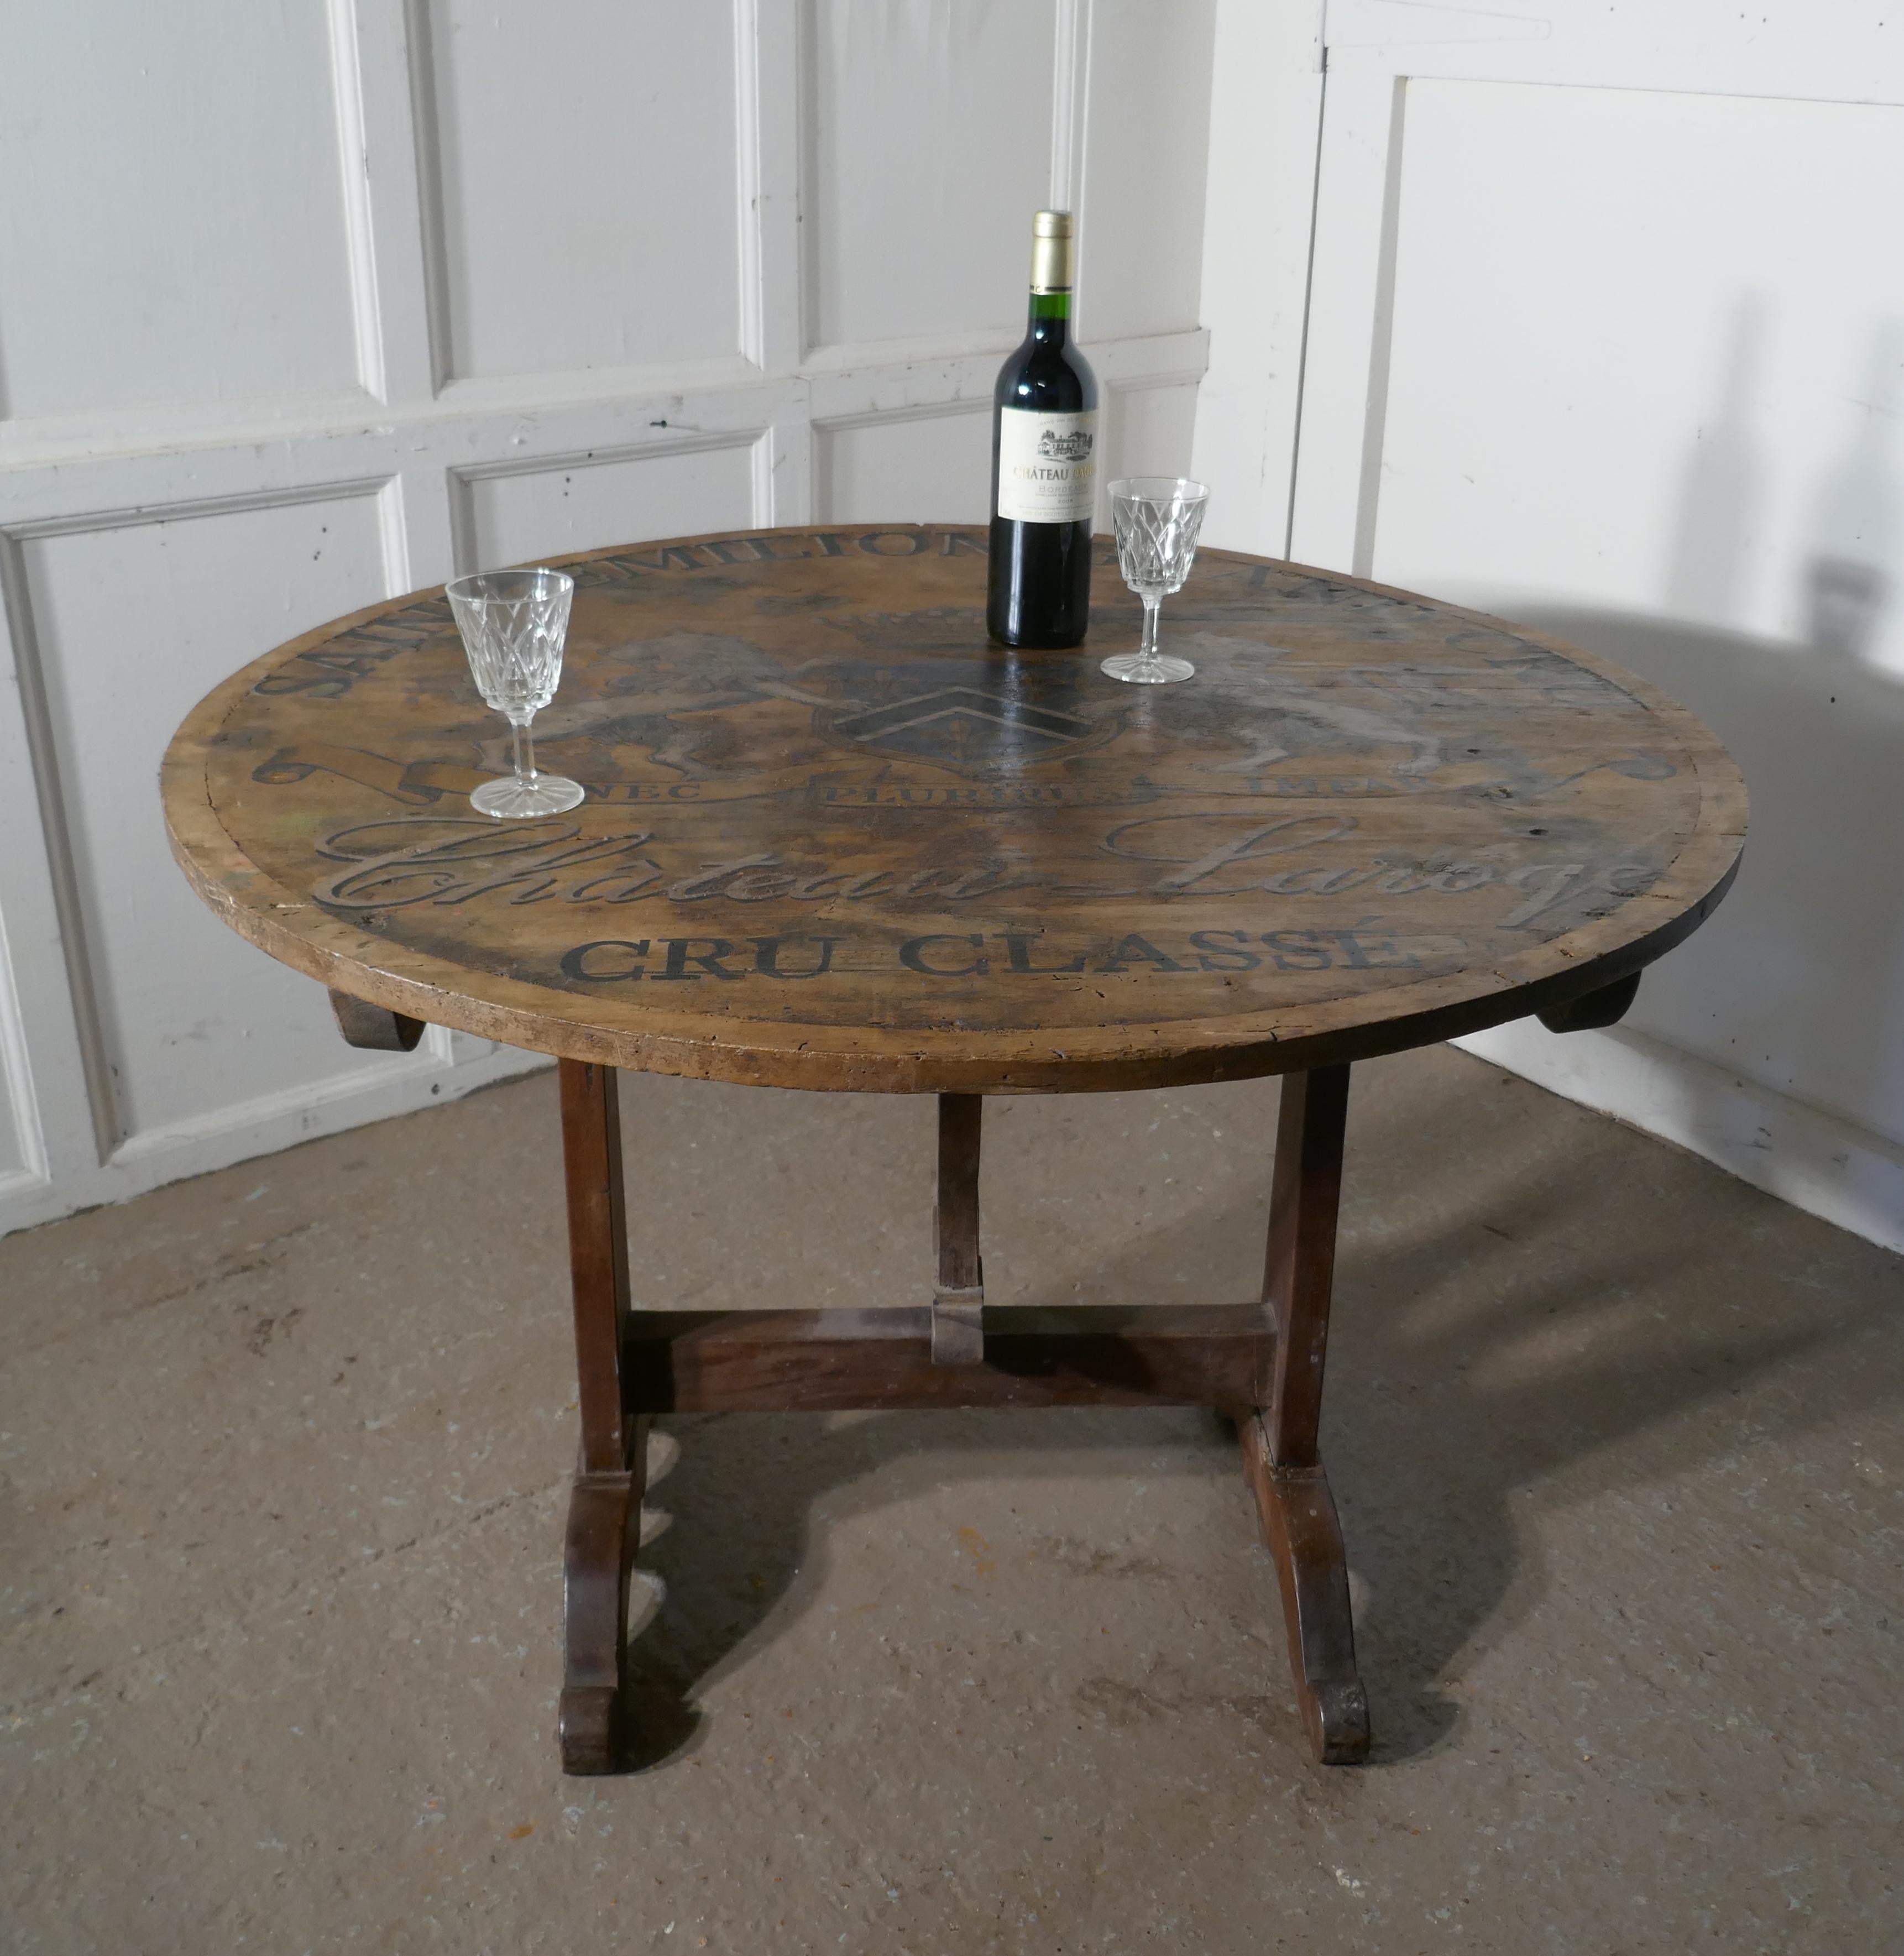 19th Century French Vineyard Wine Table from Chateau Laroge, Saint Emilion 1